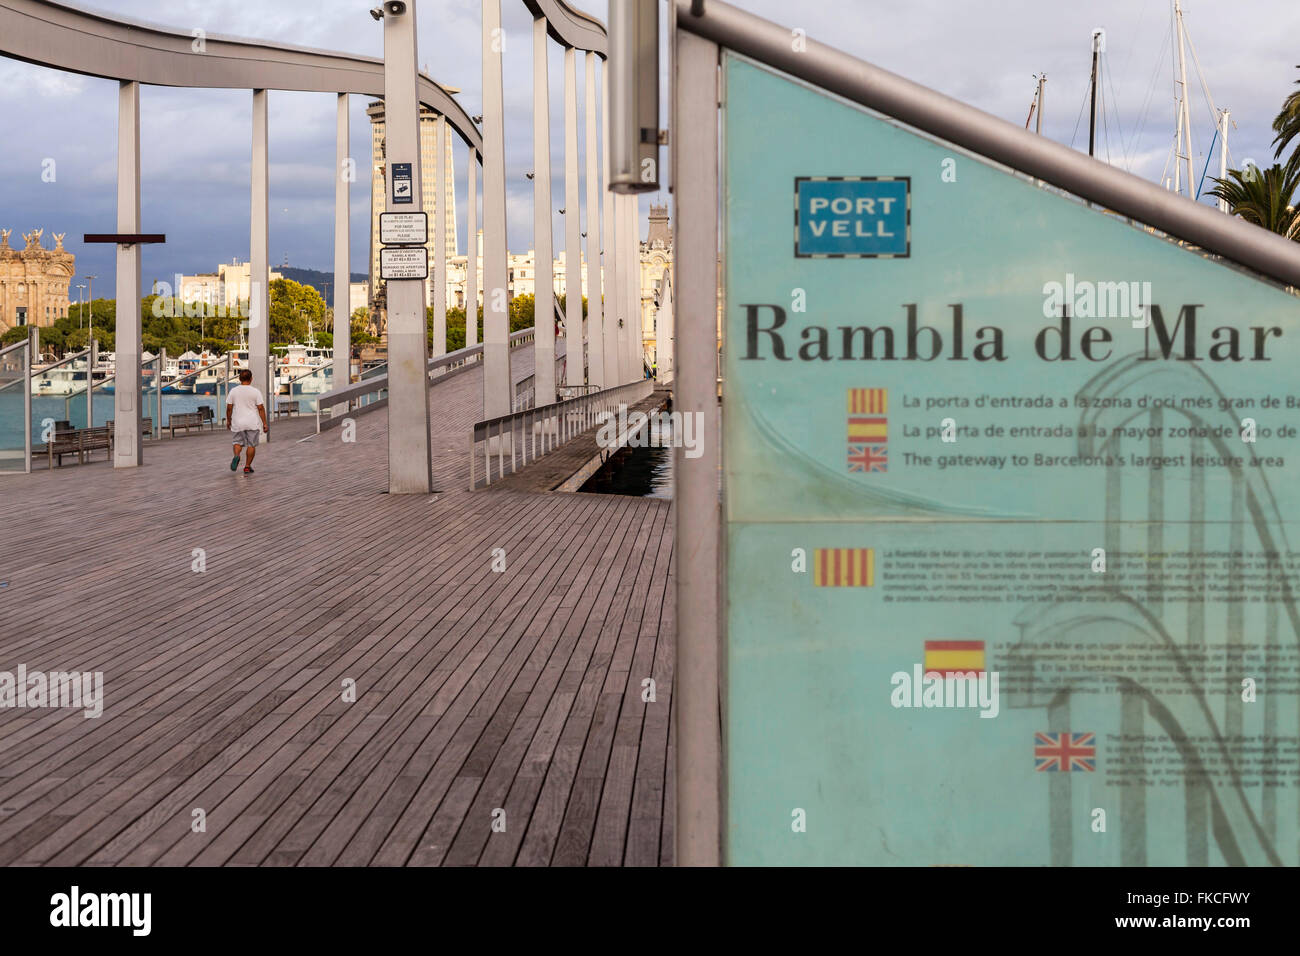 Rambla de Mar, Port Vell, Barcelona. Stock Photo